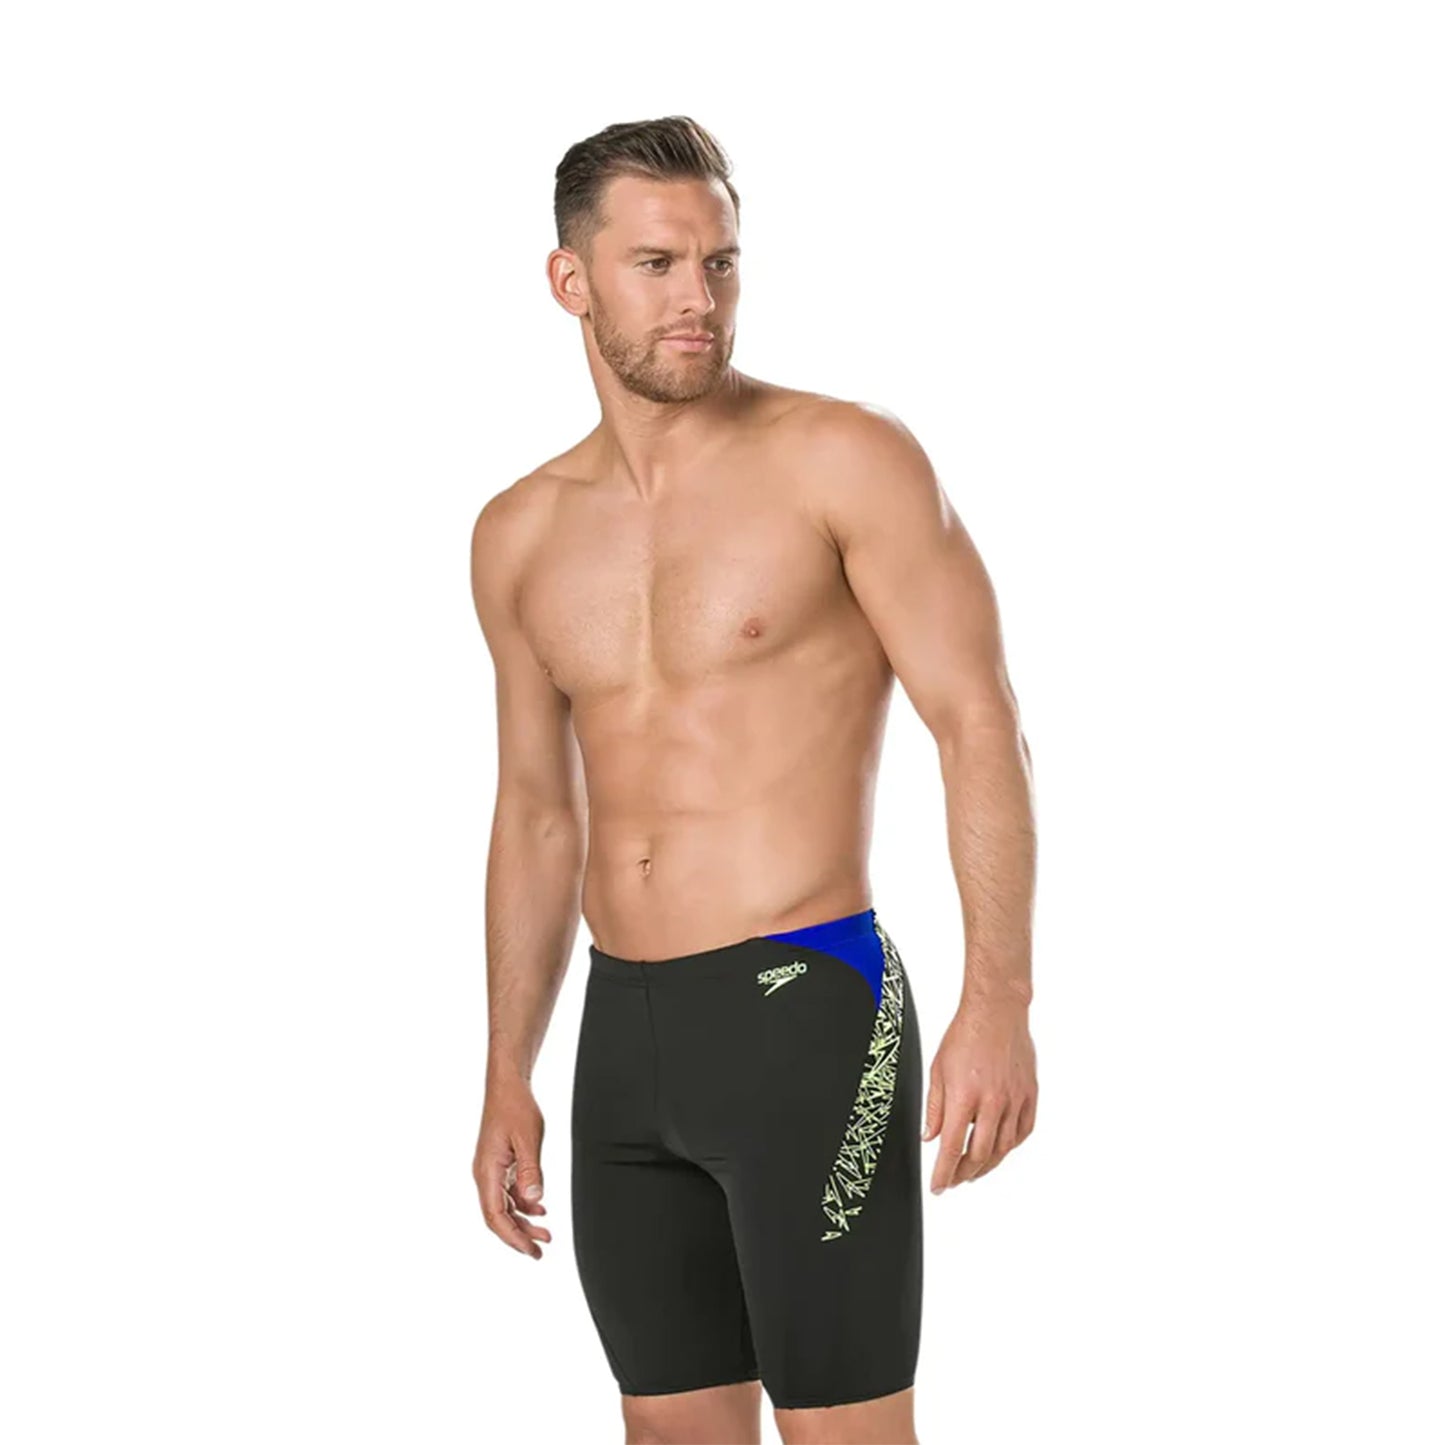 Speedo Boom Splice Swimming Aquashort for Men, Black/Bright Zest/Chroma Blue - Best Price online Prokicksports.com